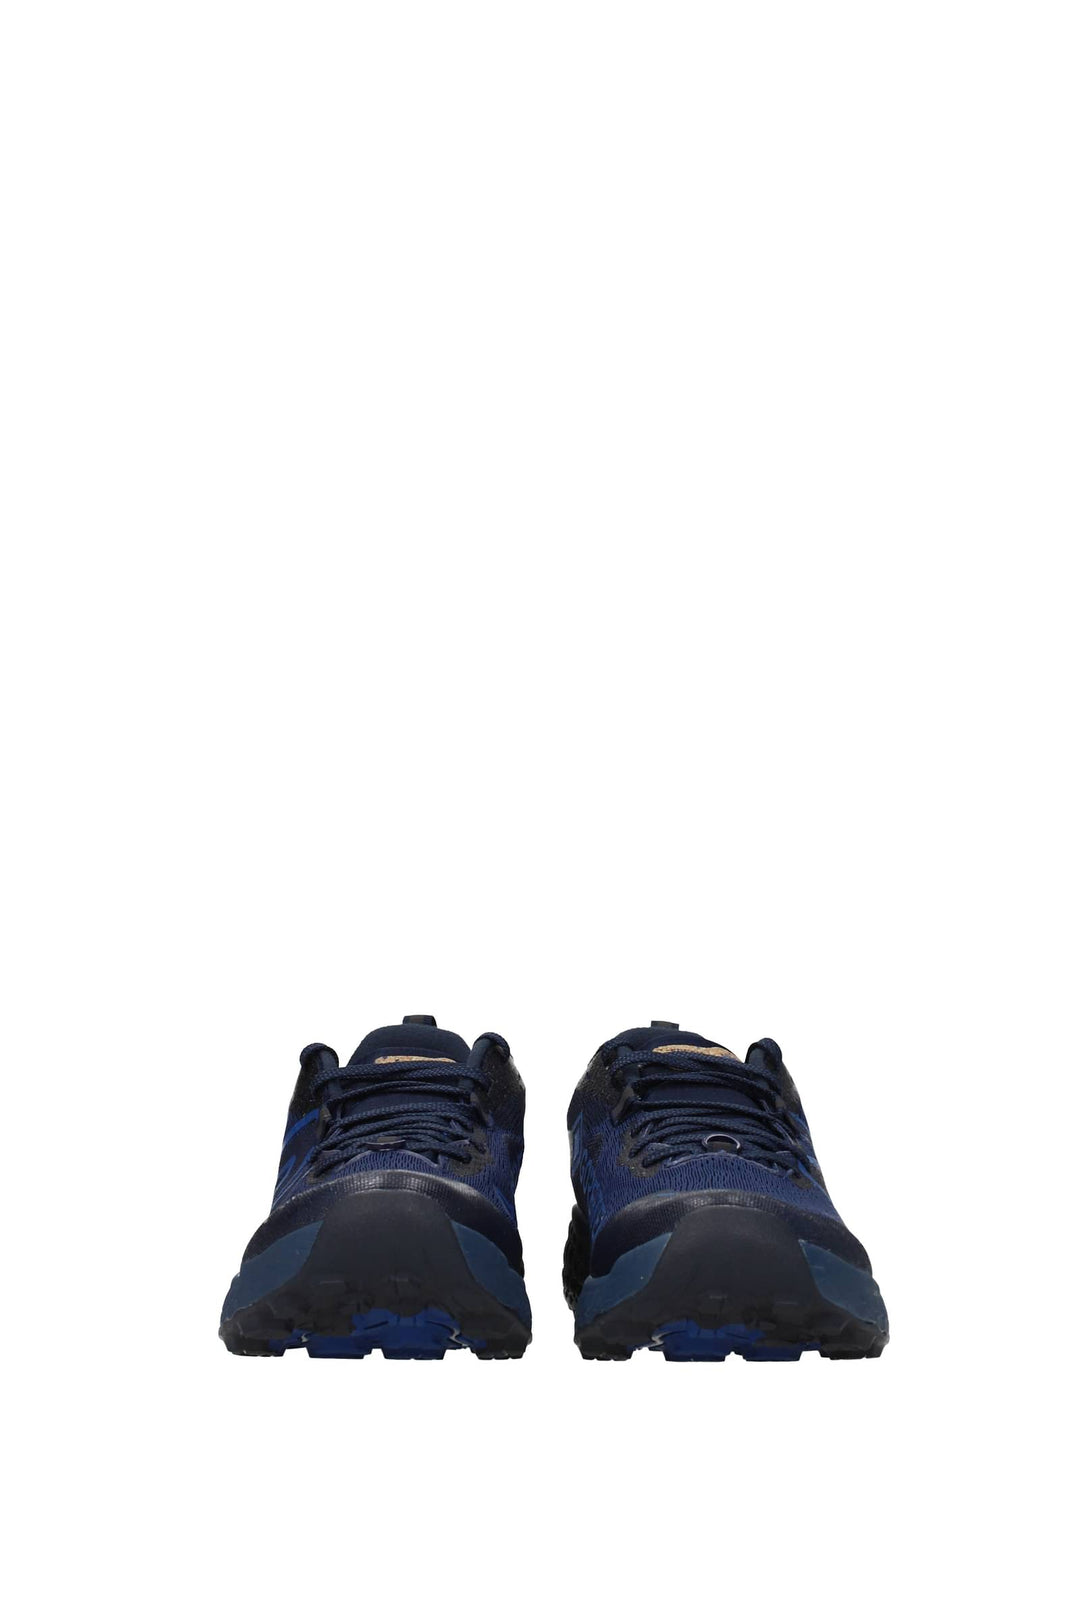 Sneakers Vibram Fresh Tessuto Blu - New Balance - Uomo